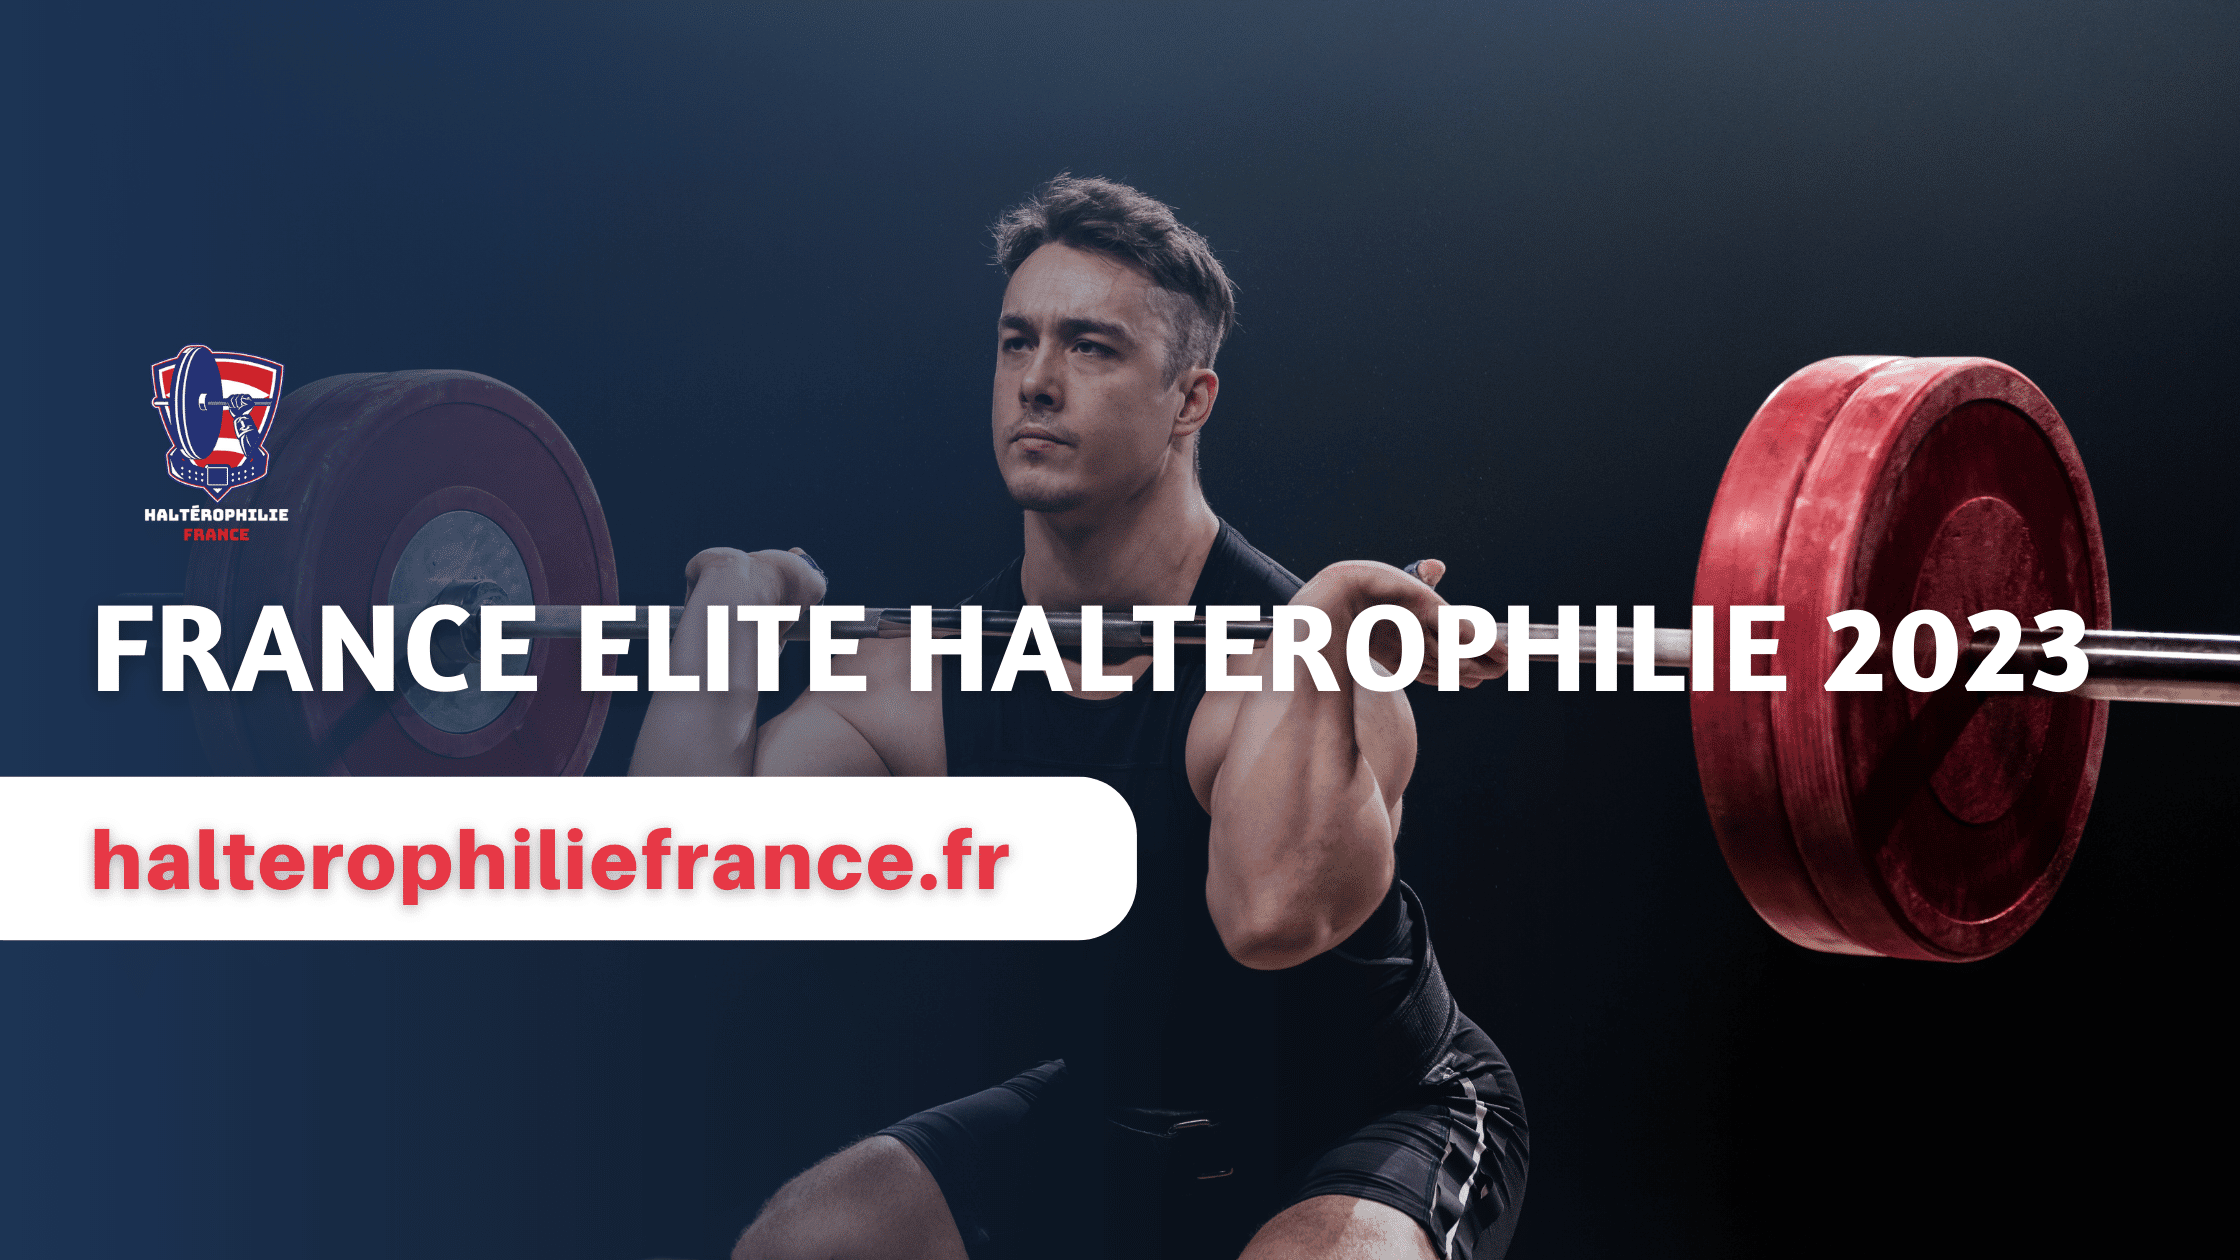 France Elite halterophilie 2023 VAULX EN VELIN